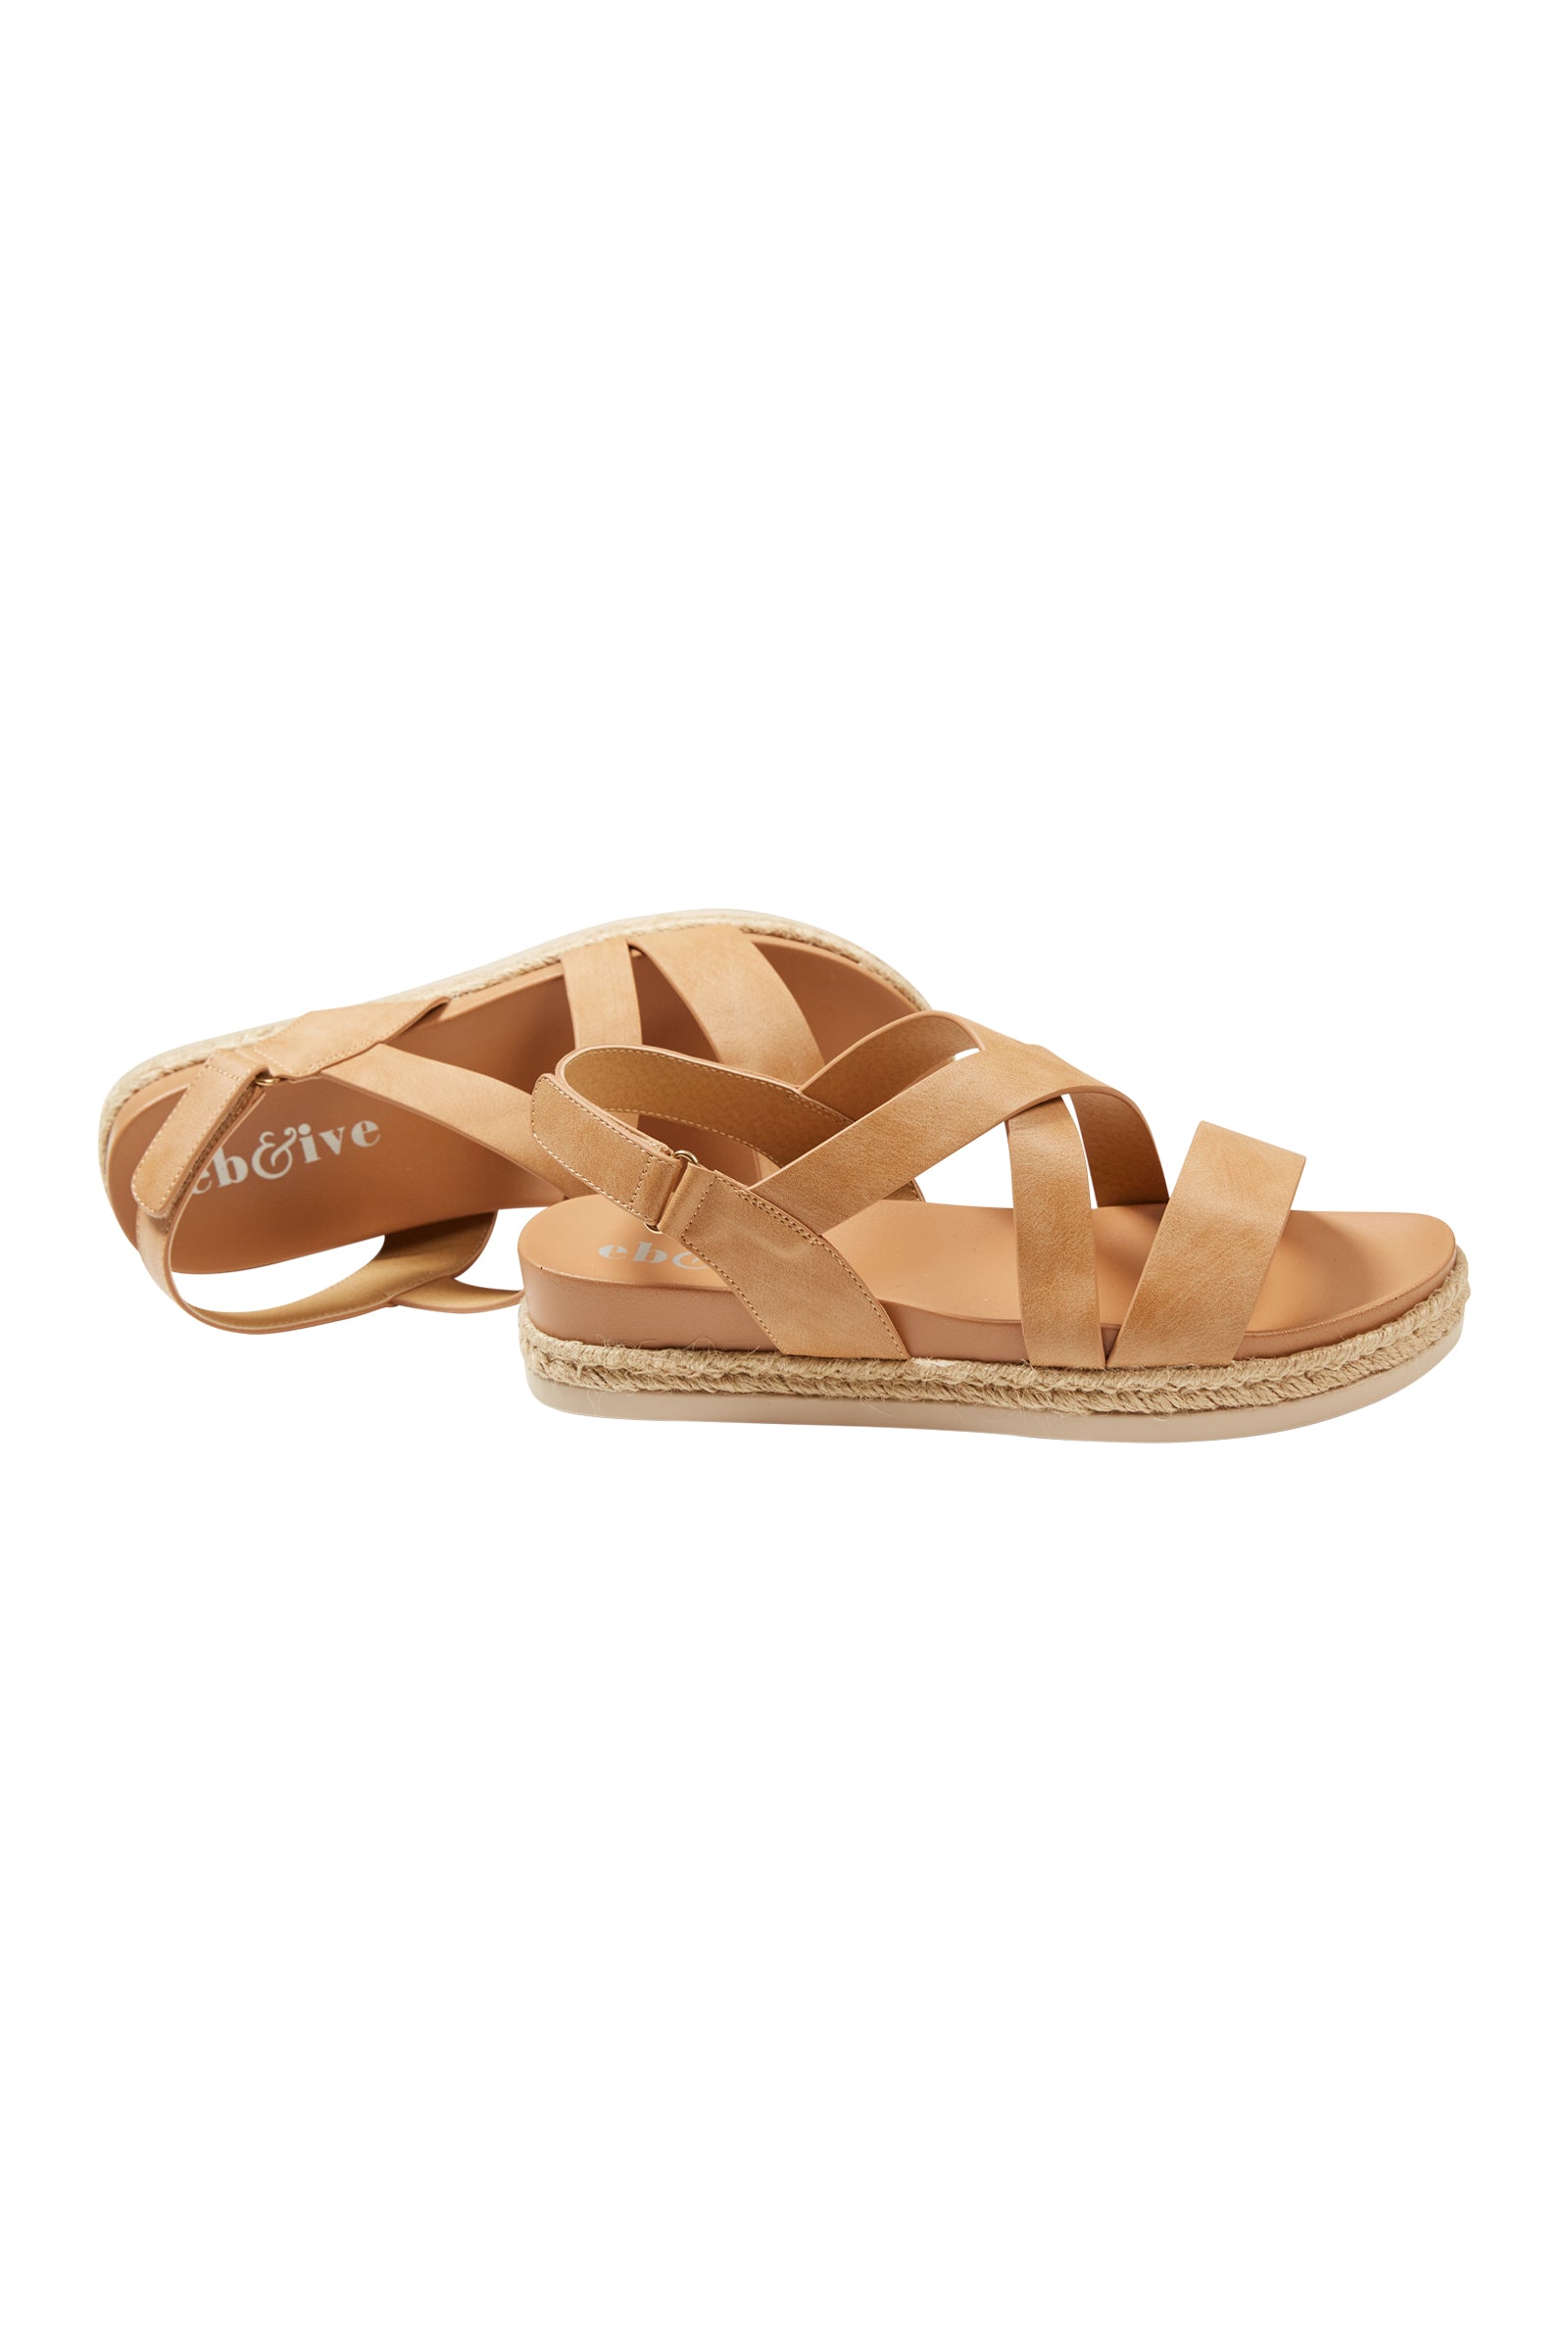 Mimosa Sandal - Tan - eb&ive Footwear - Sandals